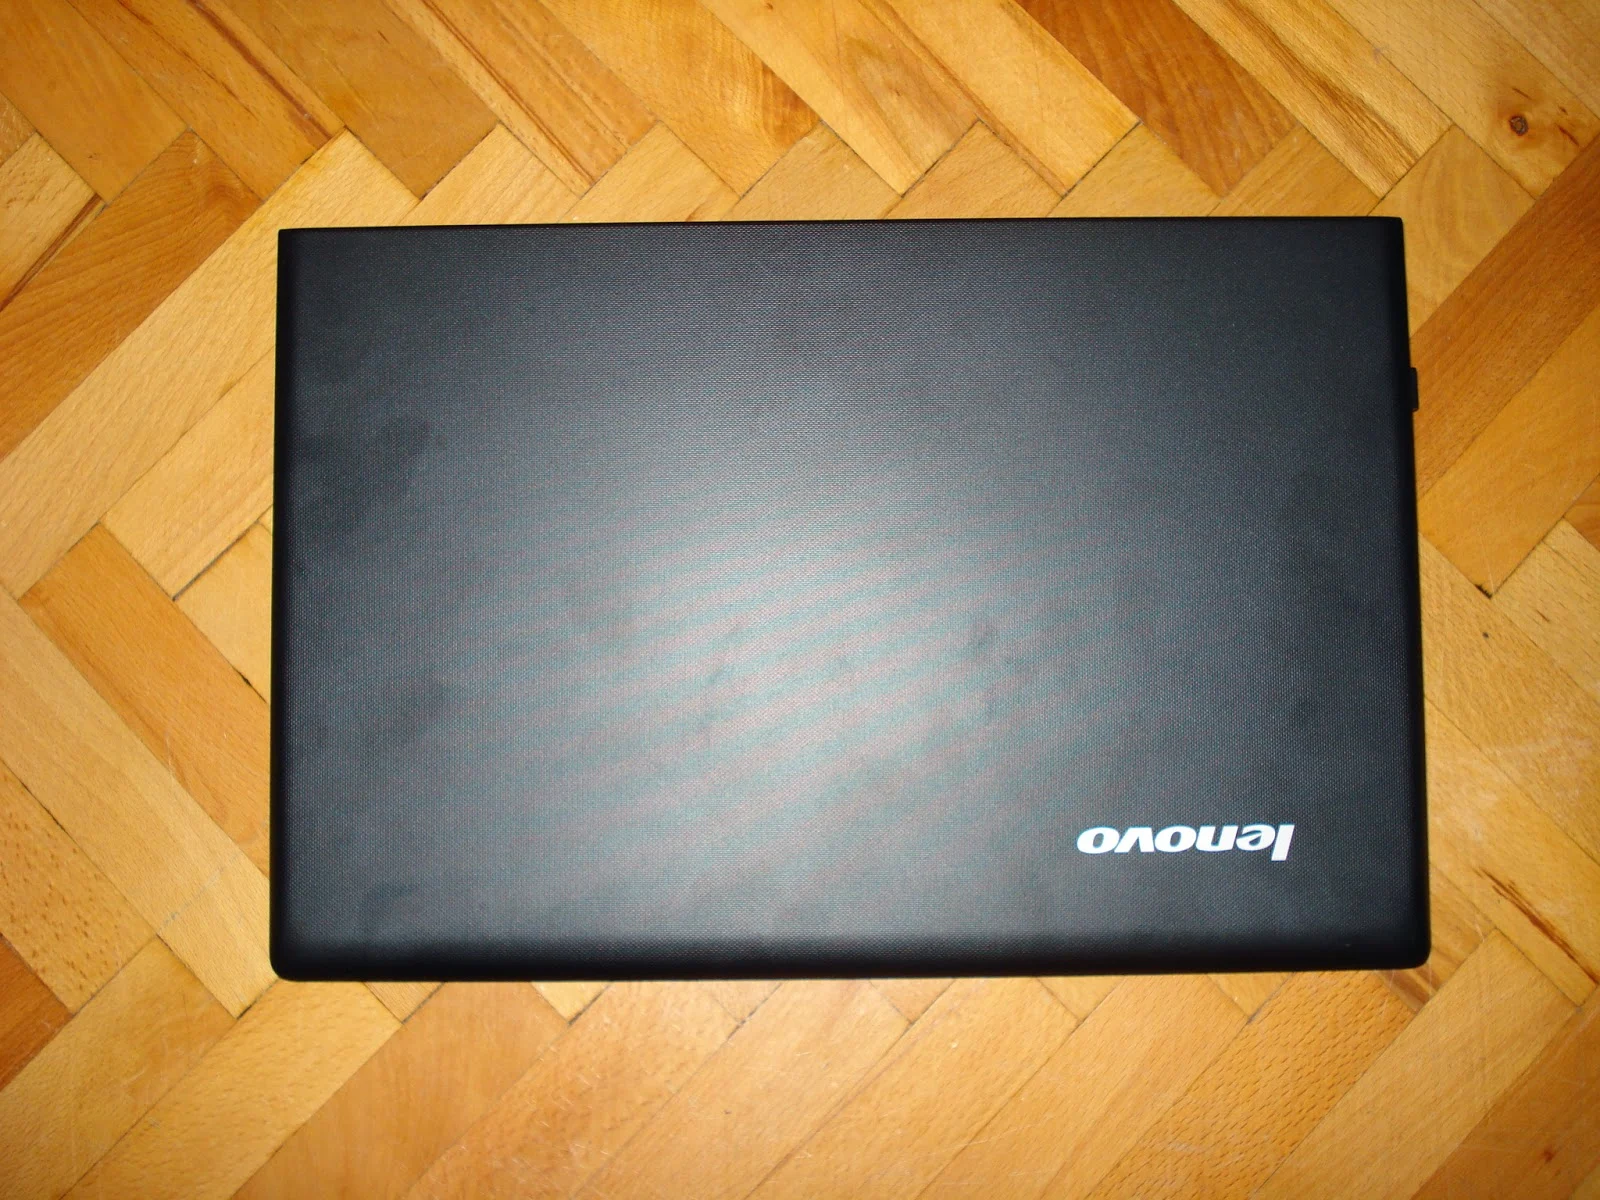 Lenovo G500 laptop